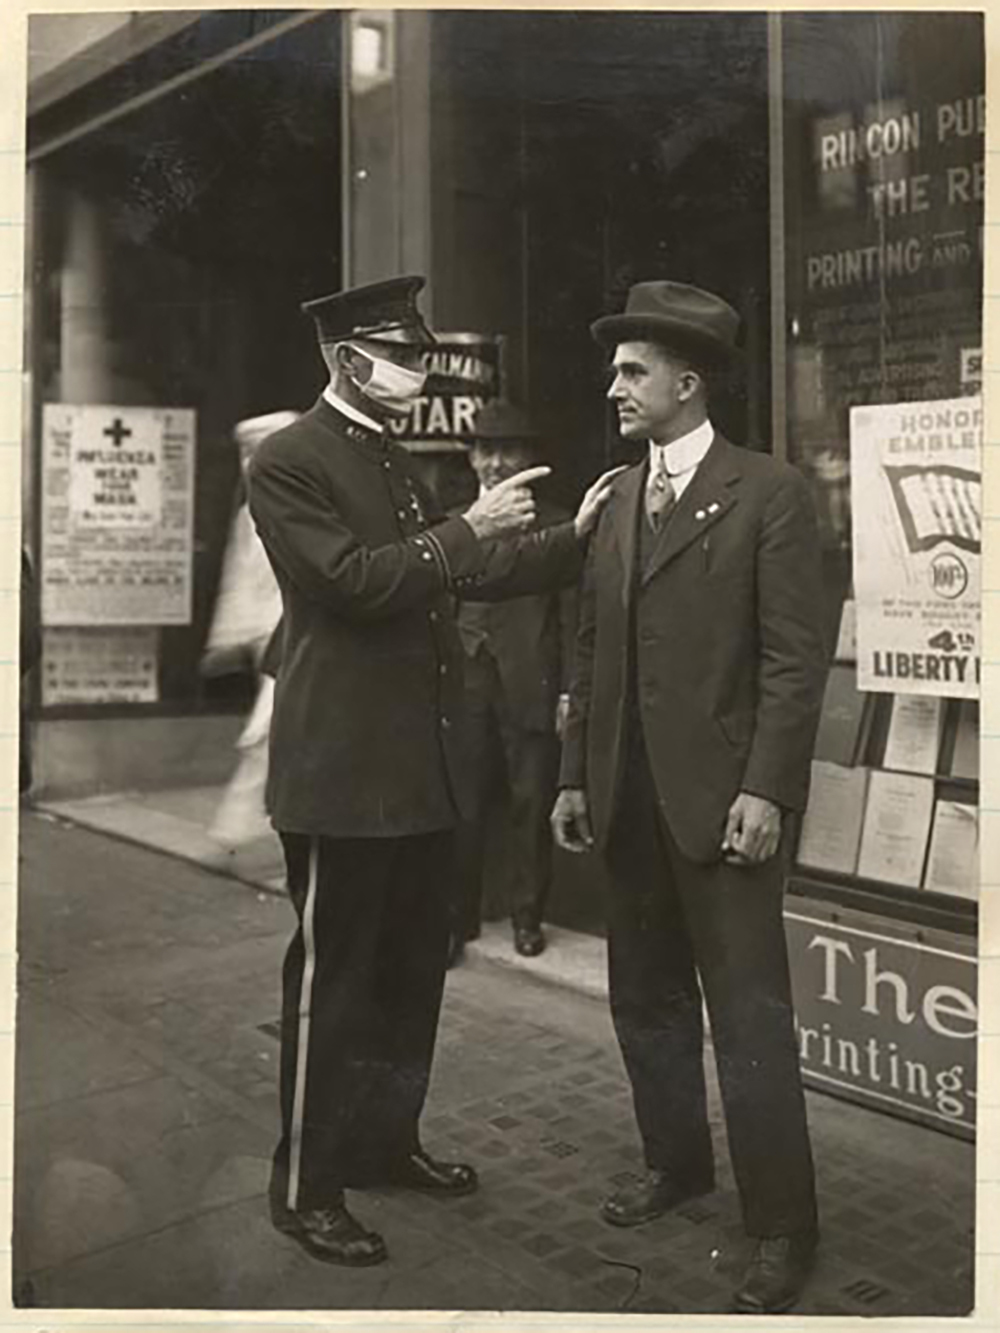 Hub Rood poeder The mask wars of the 1918 flu pandemic | Crosscut